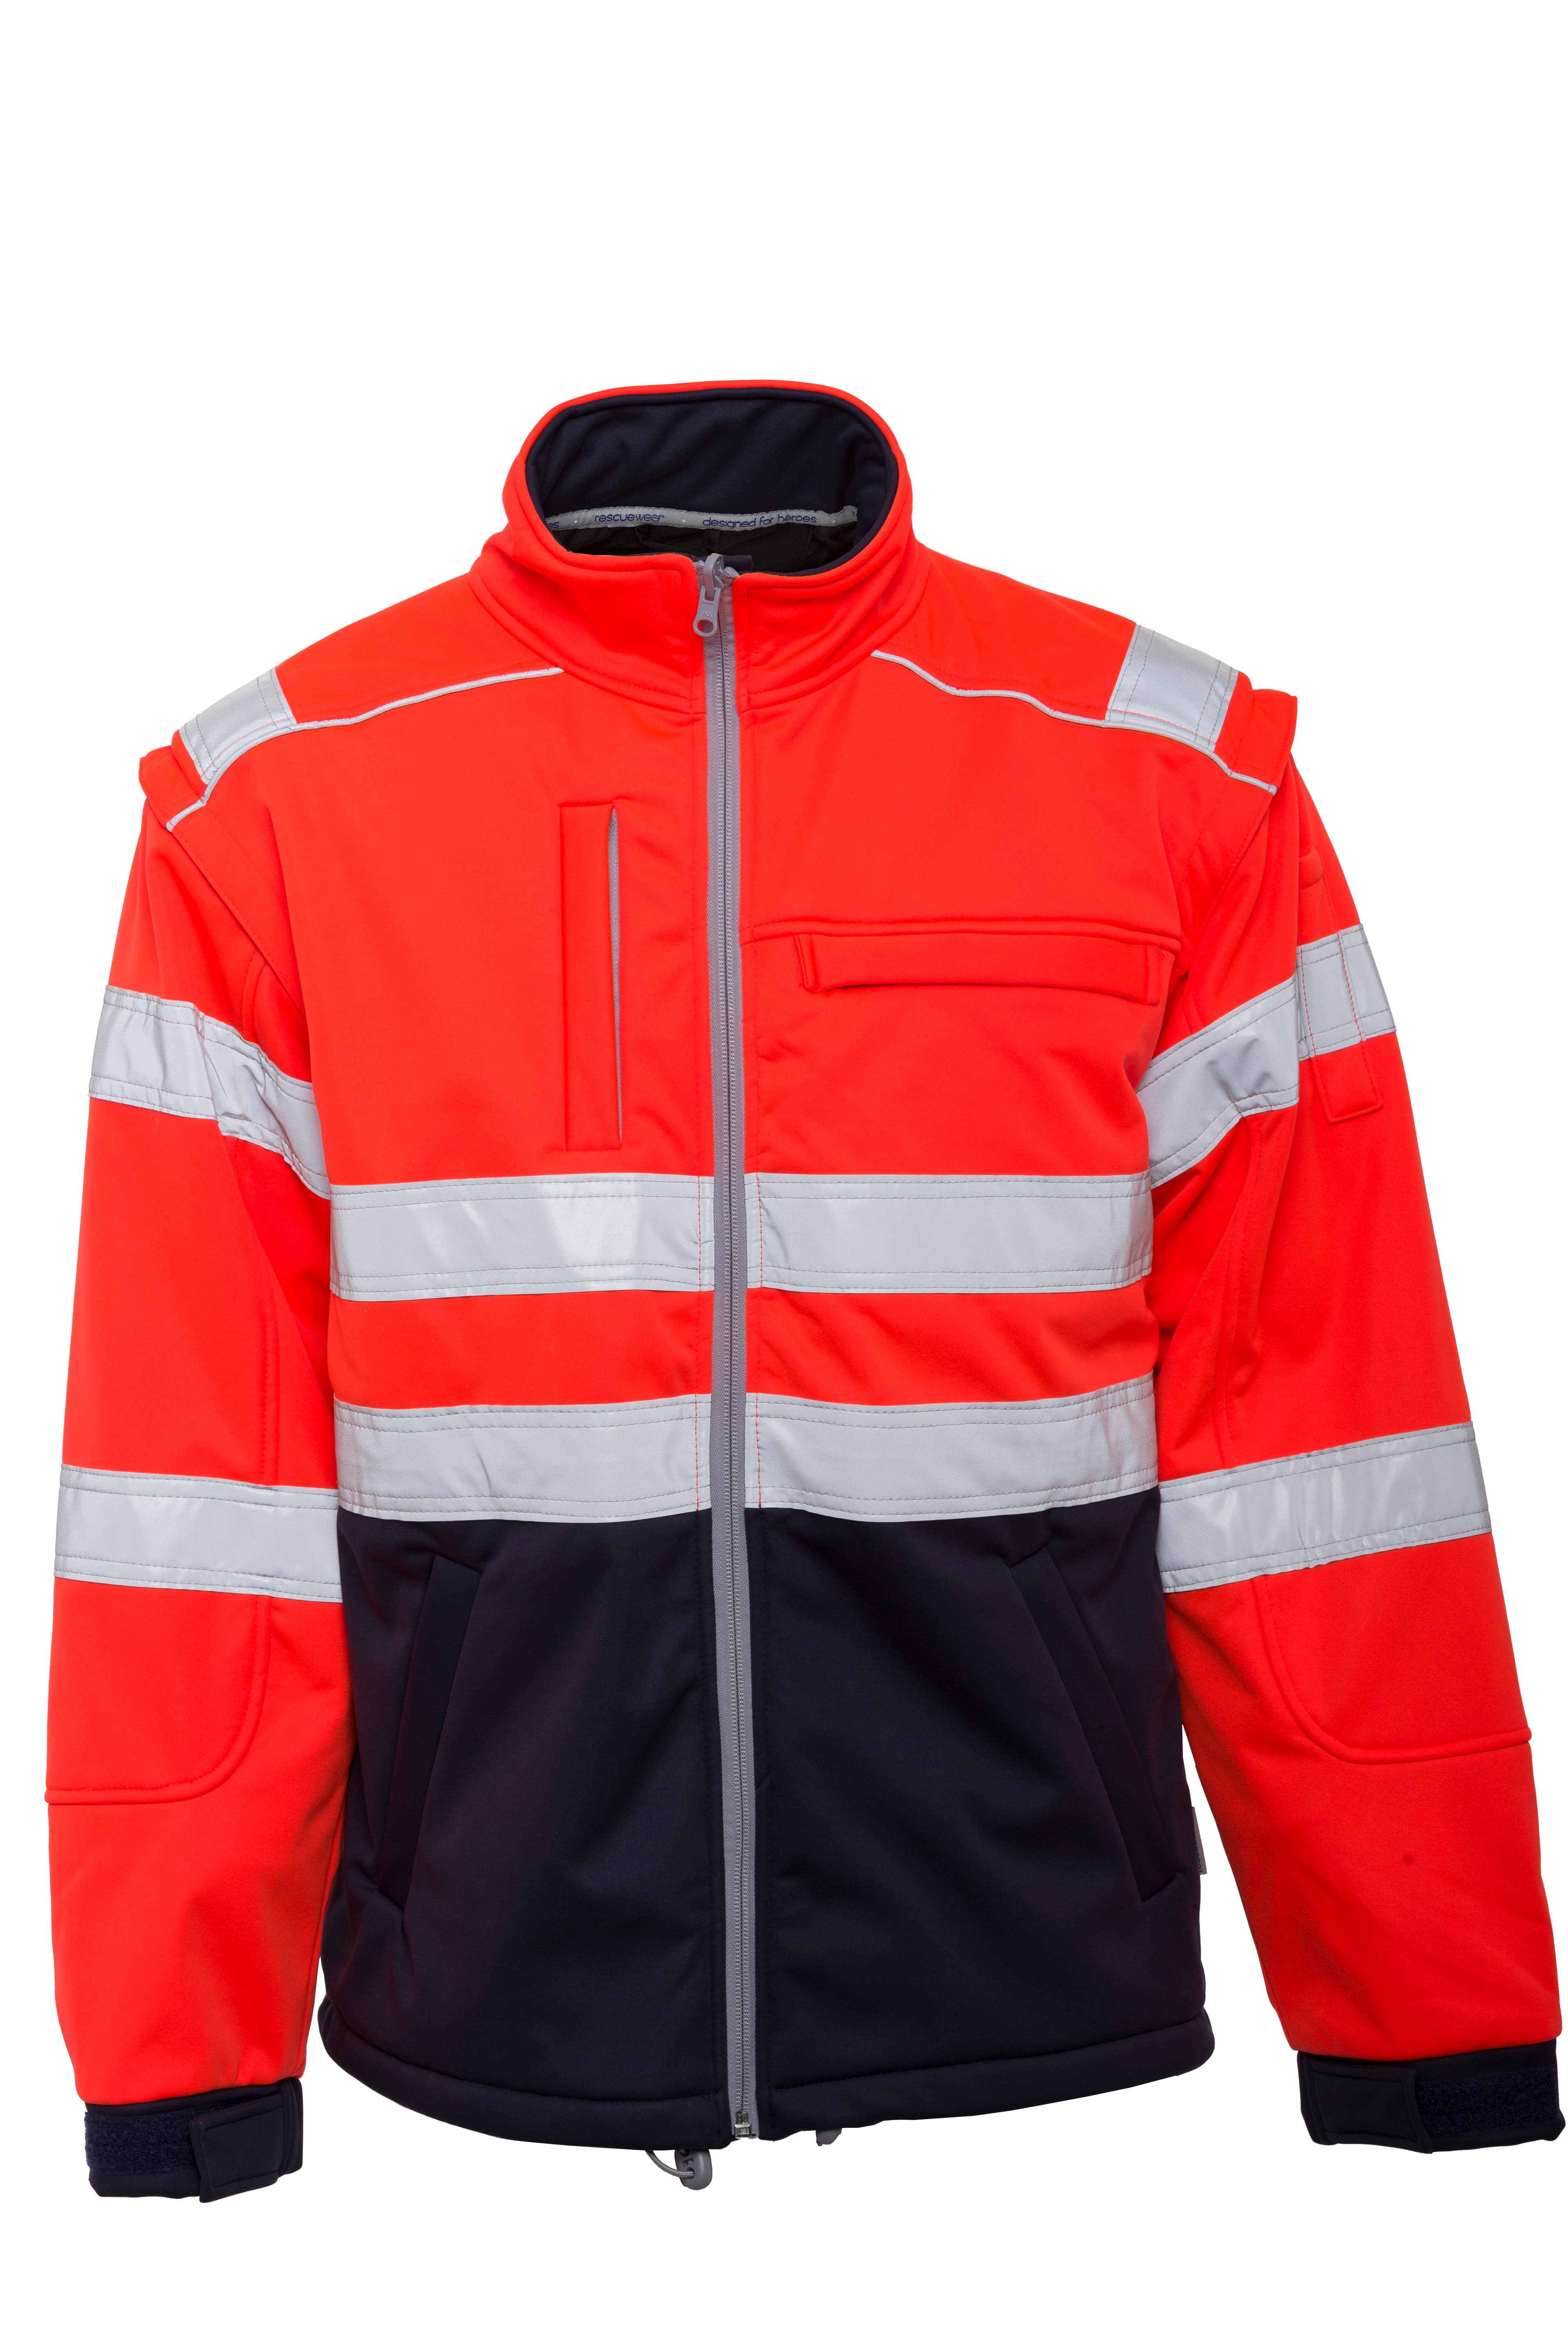 Rescuewear Softshelljacke HiVis Klasse 3 Marineblau / Neon Rot - 5XL